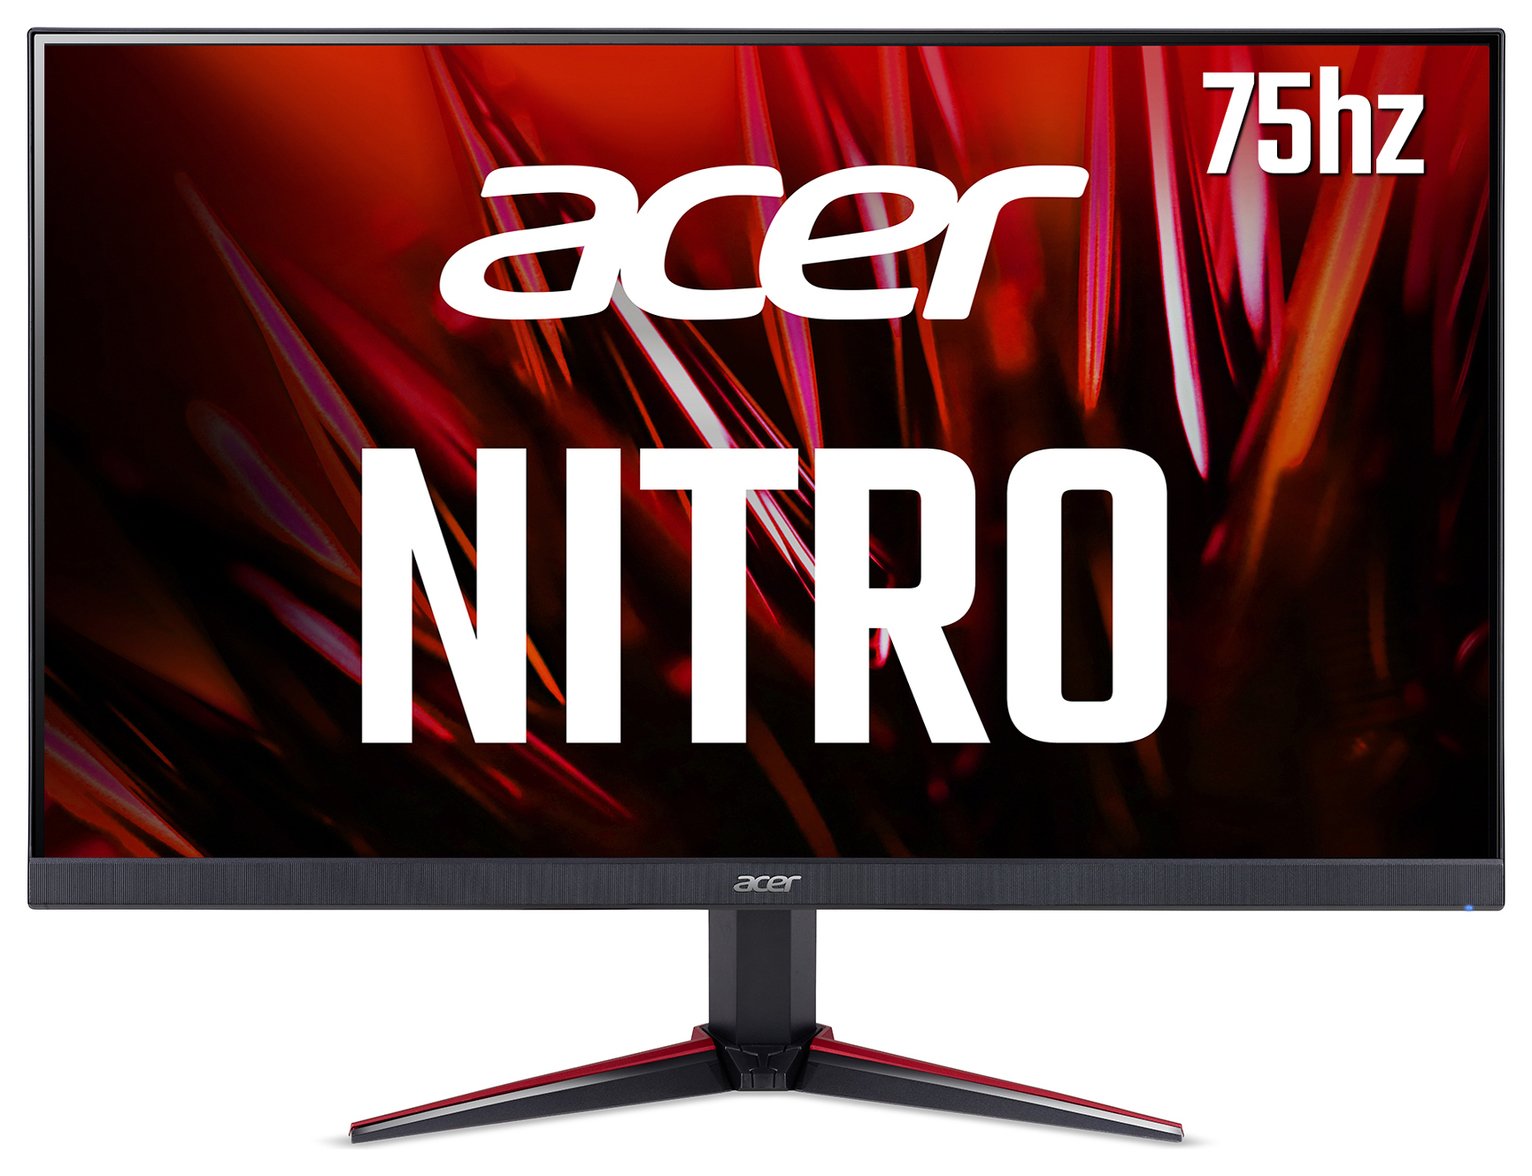 Acer Nitro VG270bmiix 27 Inch FHD 75Hz IPS Gaming Monitor